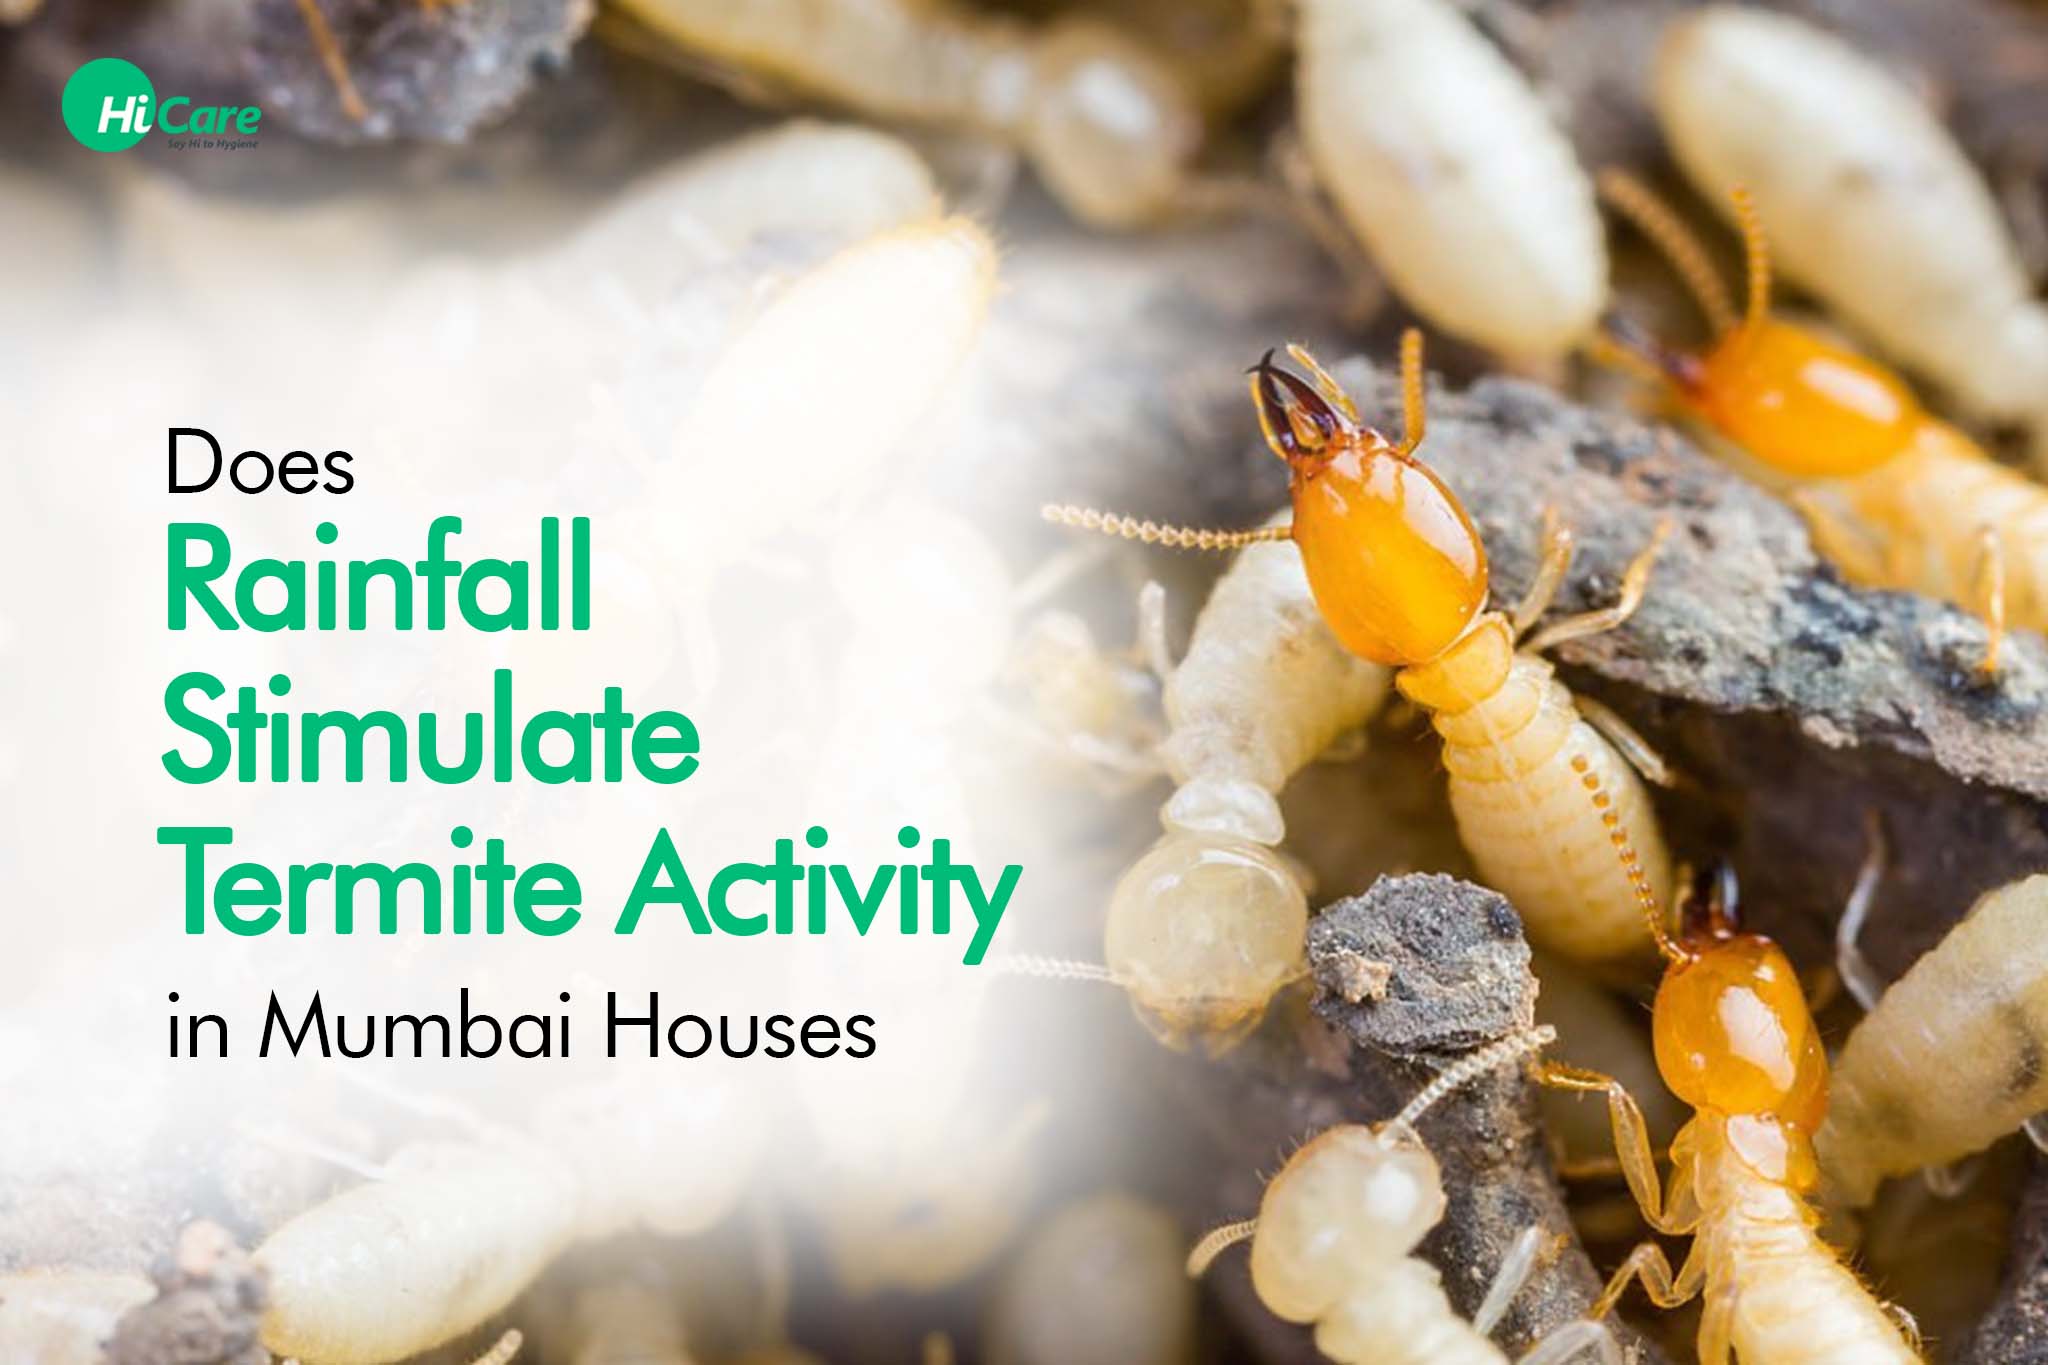 Does Rainfall Stimulate Termite Activity in Mumbai Houses